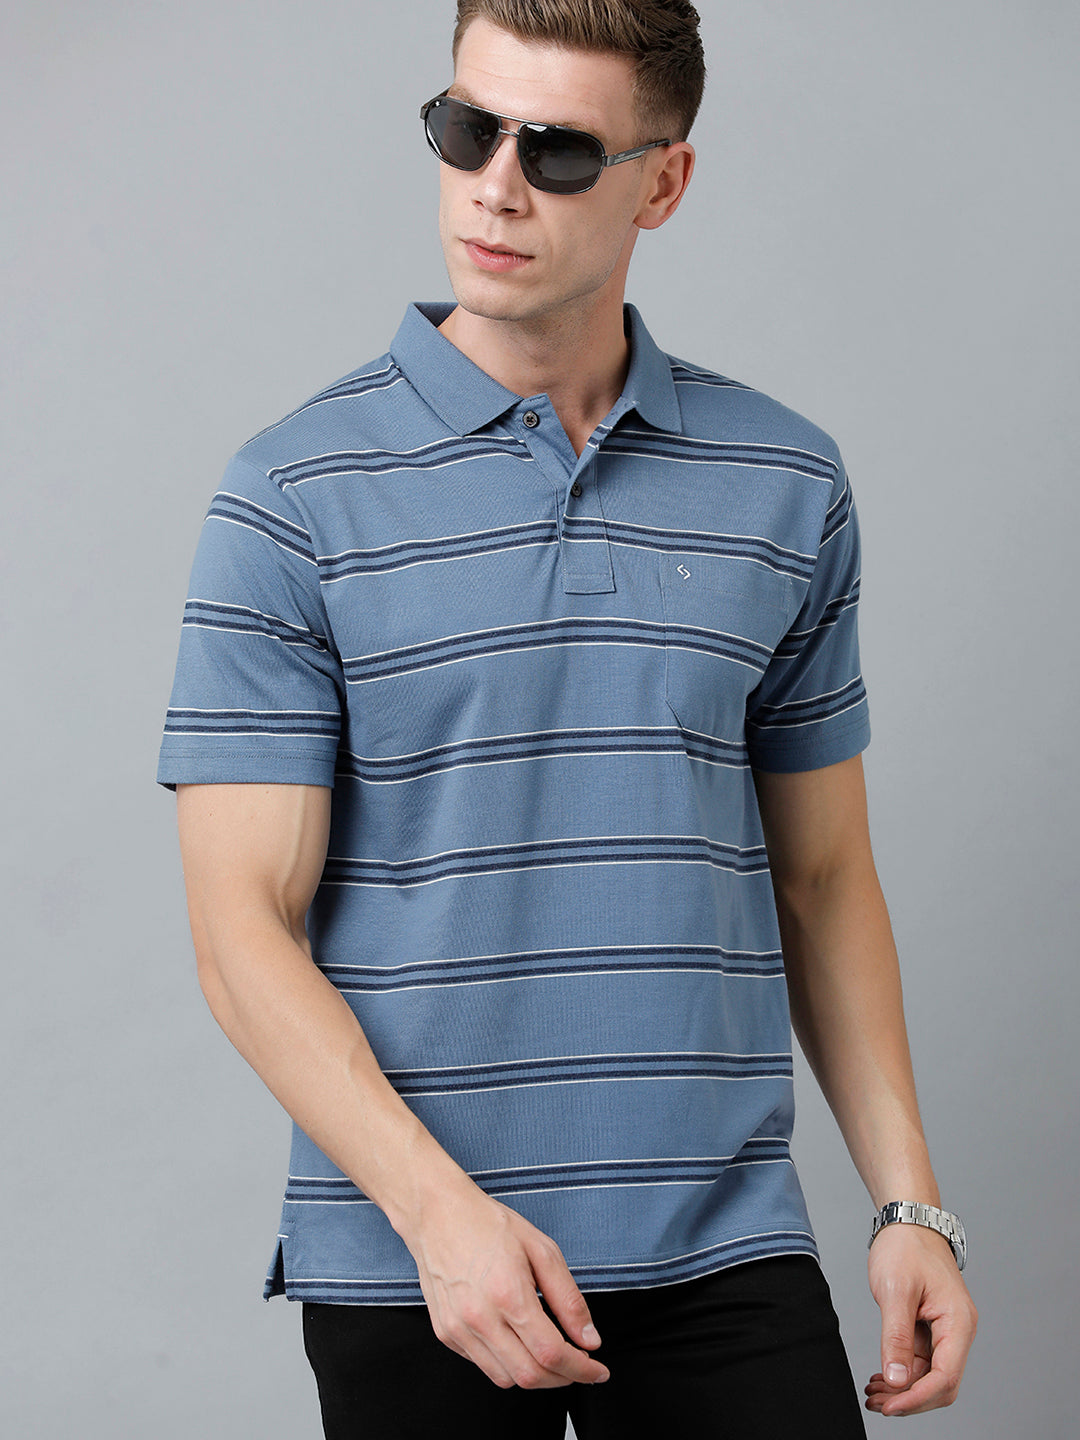 Classic Polo Men's Cotton Blend Half Sleeve Striped Authentic Fit Polo Neck Blue Color T-Shirt | Avon - 524 A